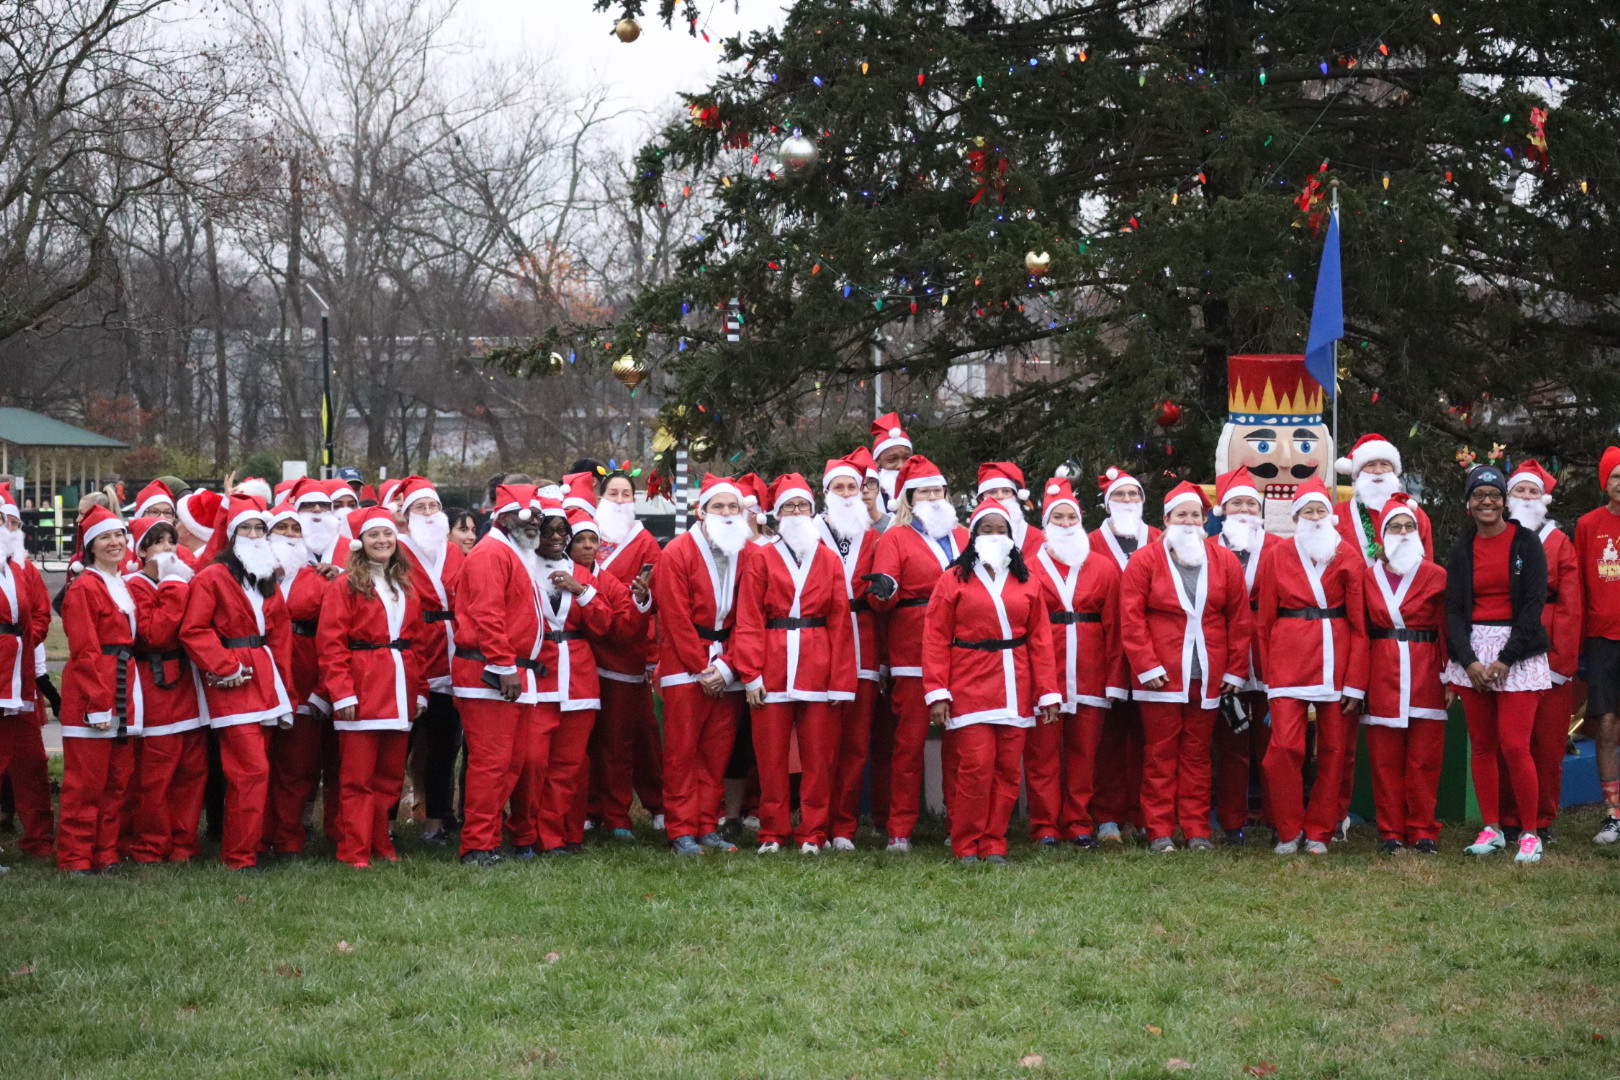 Festive 5K Fun Run & Walk in Brentwood, TN, Participants wearing Santa outfits.